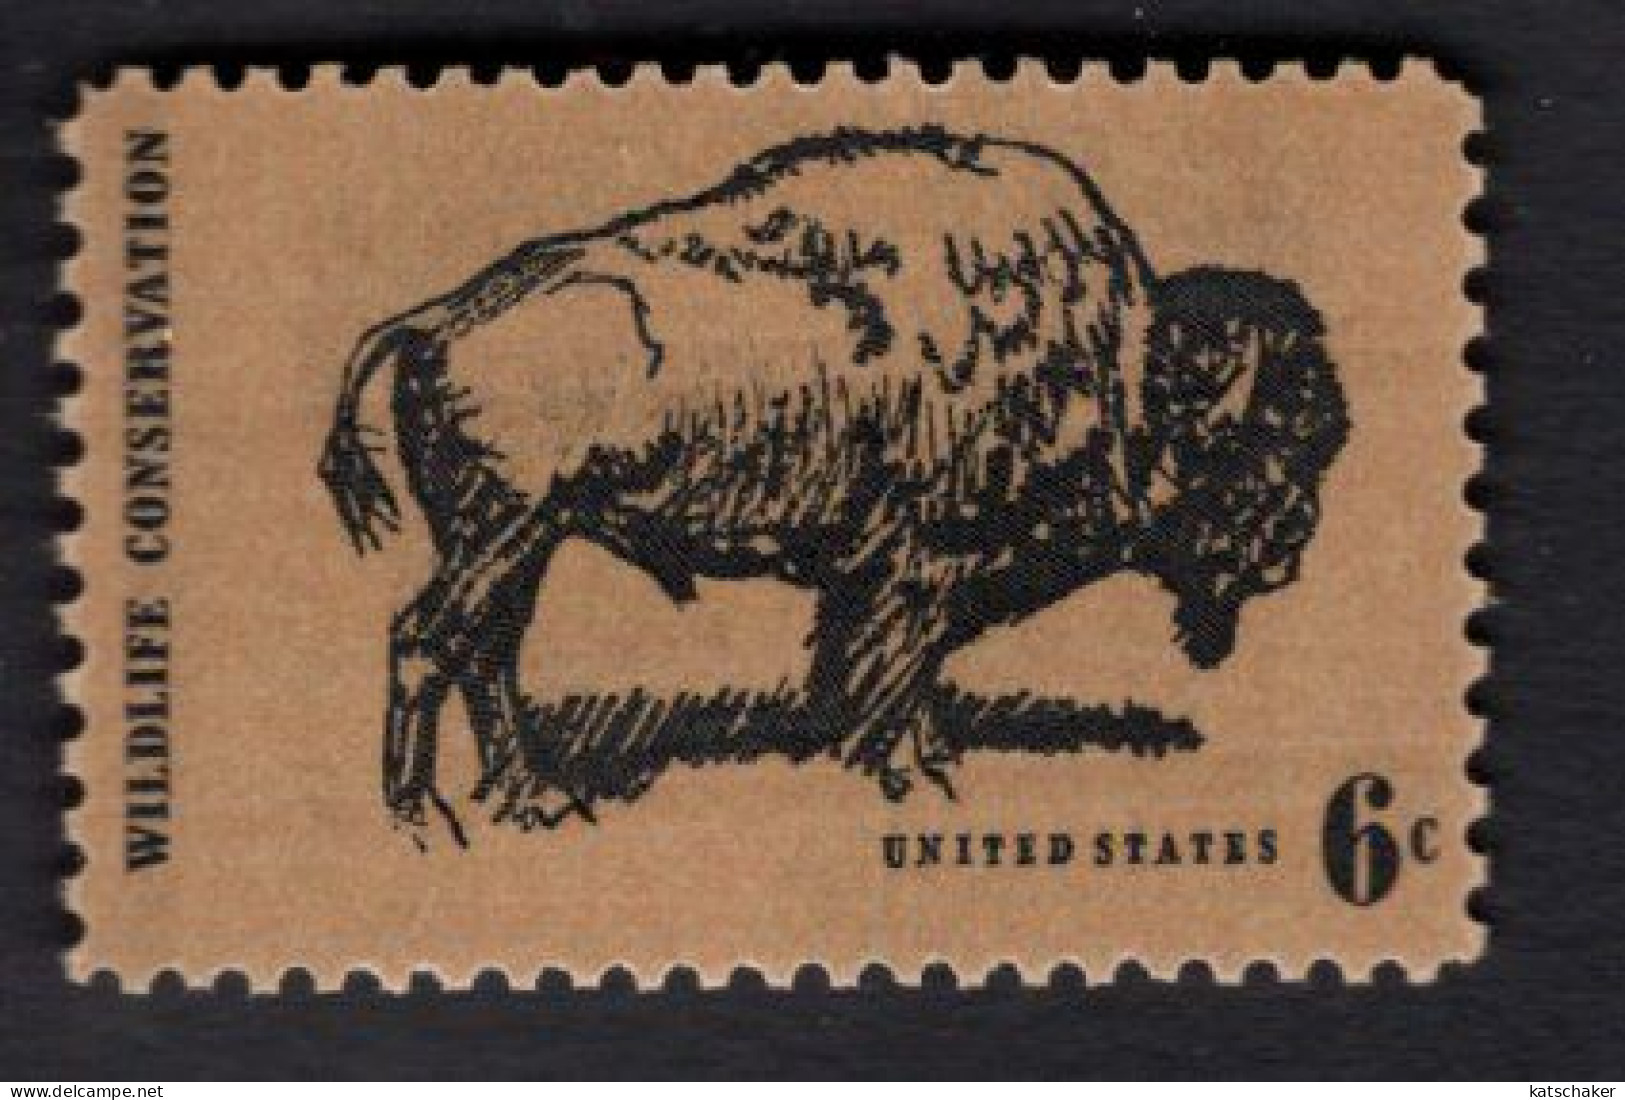 203634160 1970  SCOTT 1392 (XX) POSTFRIS MINT NEVER HINGED I (XX) - WILDLIFE CONSERVATION - AMERICAN BUFFALO Fauna - Neufs